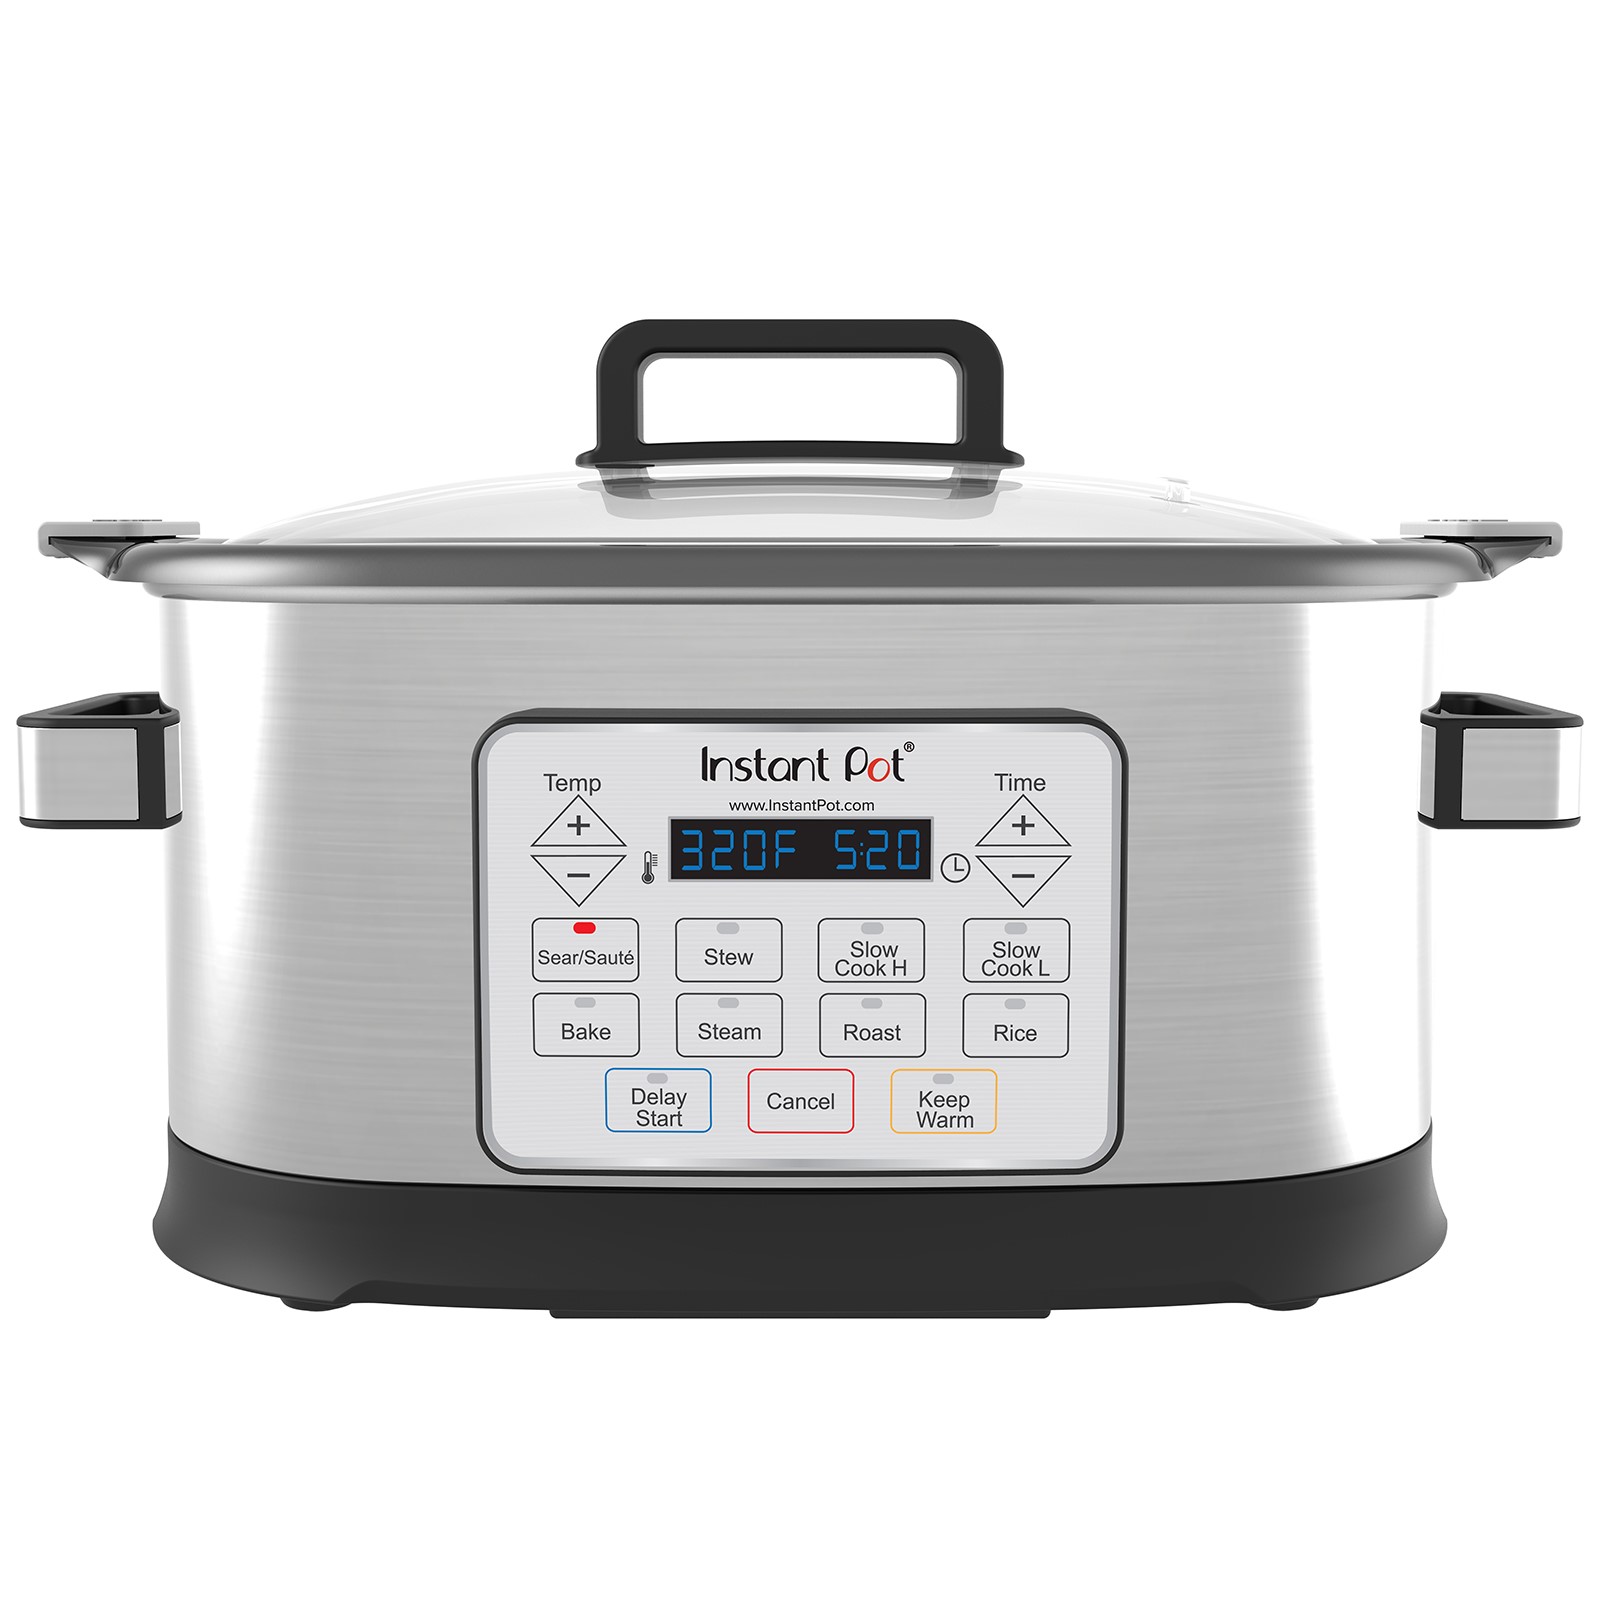 Instant Pot Gem Electric Pressure Cooker, Programmable Multi-Use Slow Cooker, 6 Quart - image 1 of 6